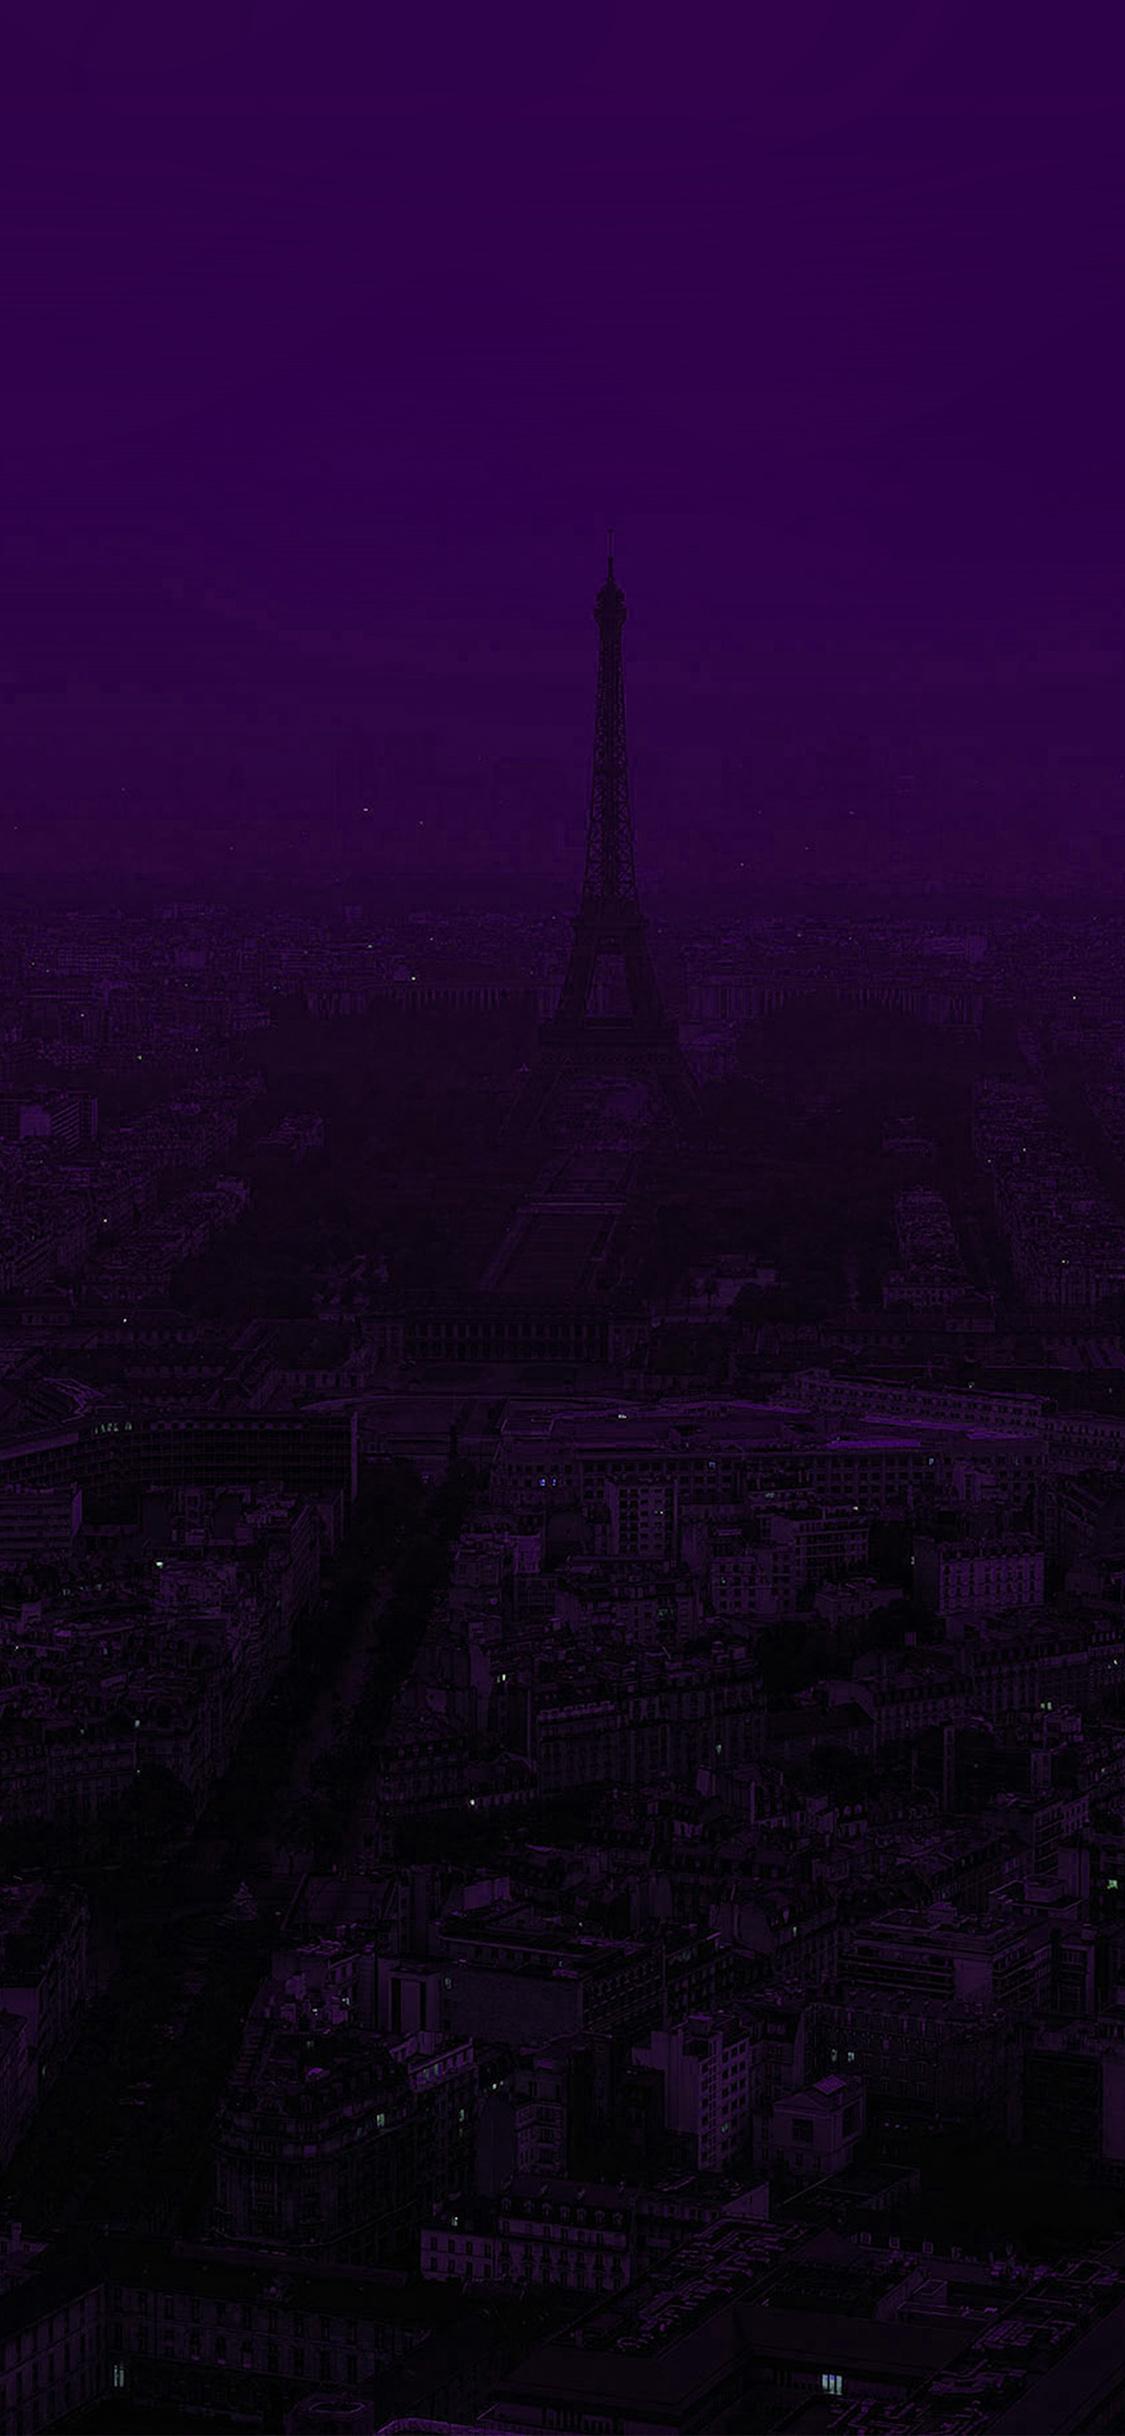 iPhone X wallpaper. paris dark purple city illustration art